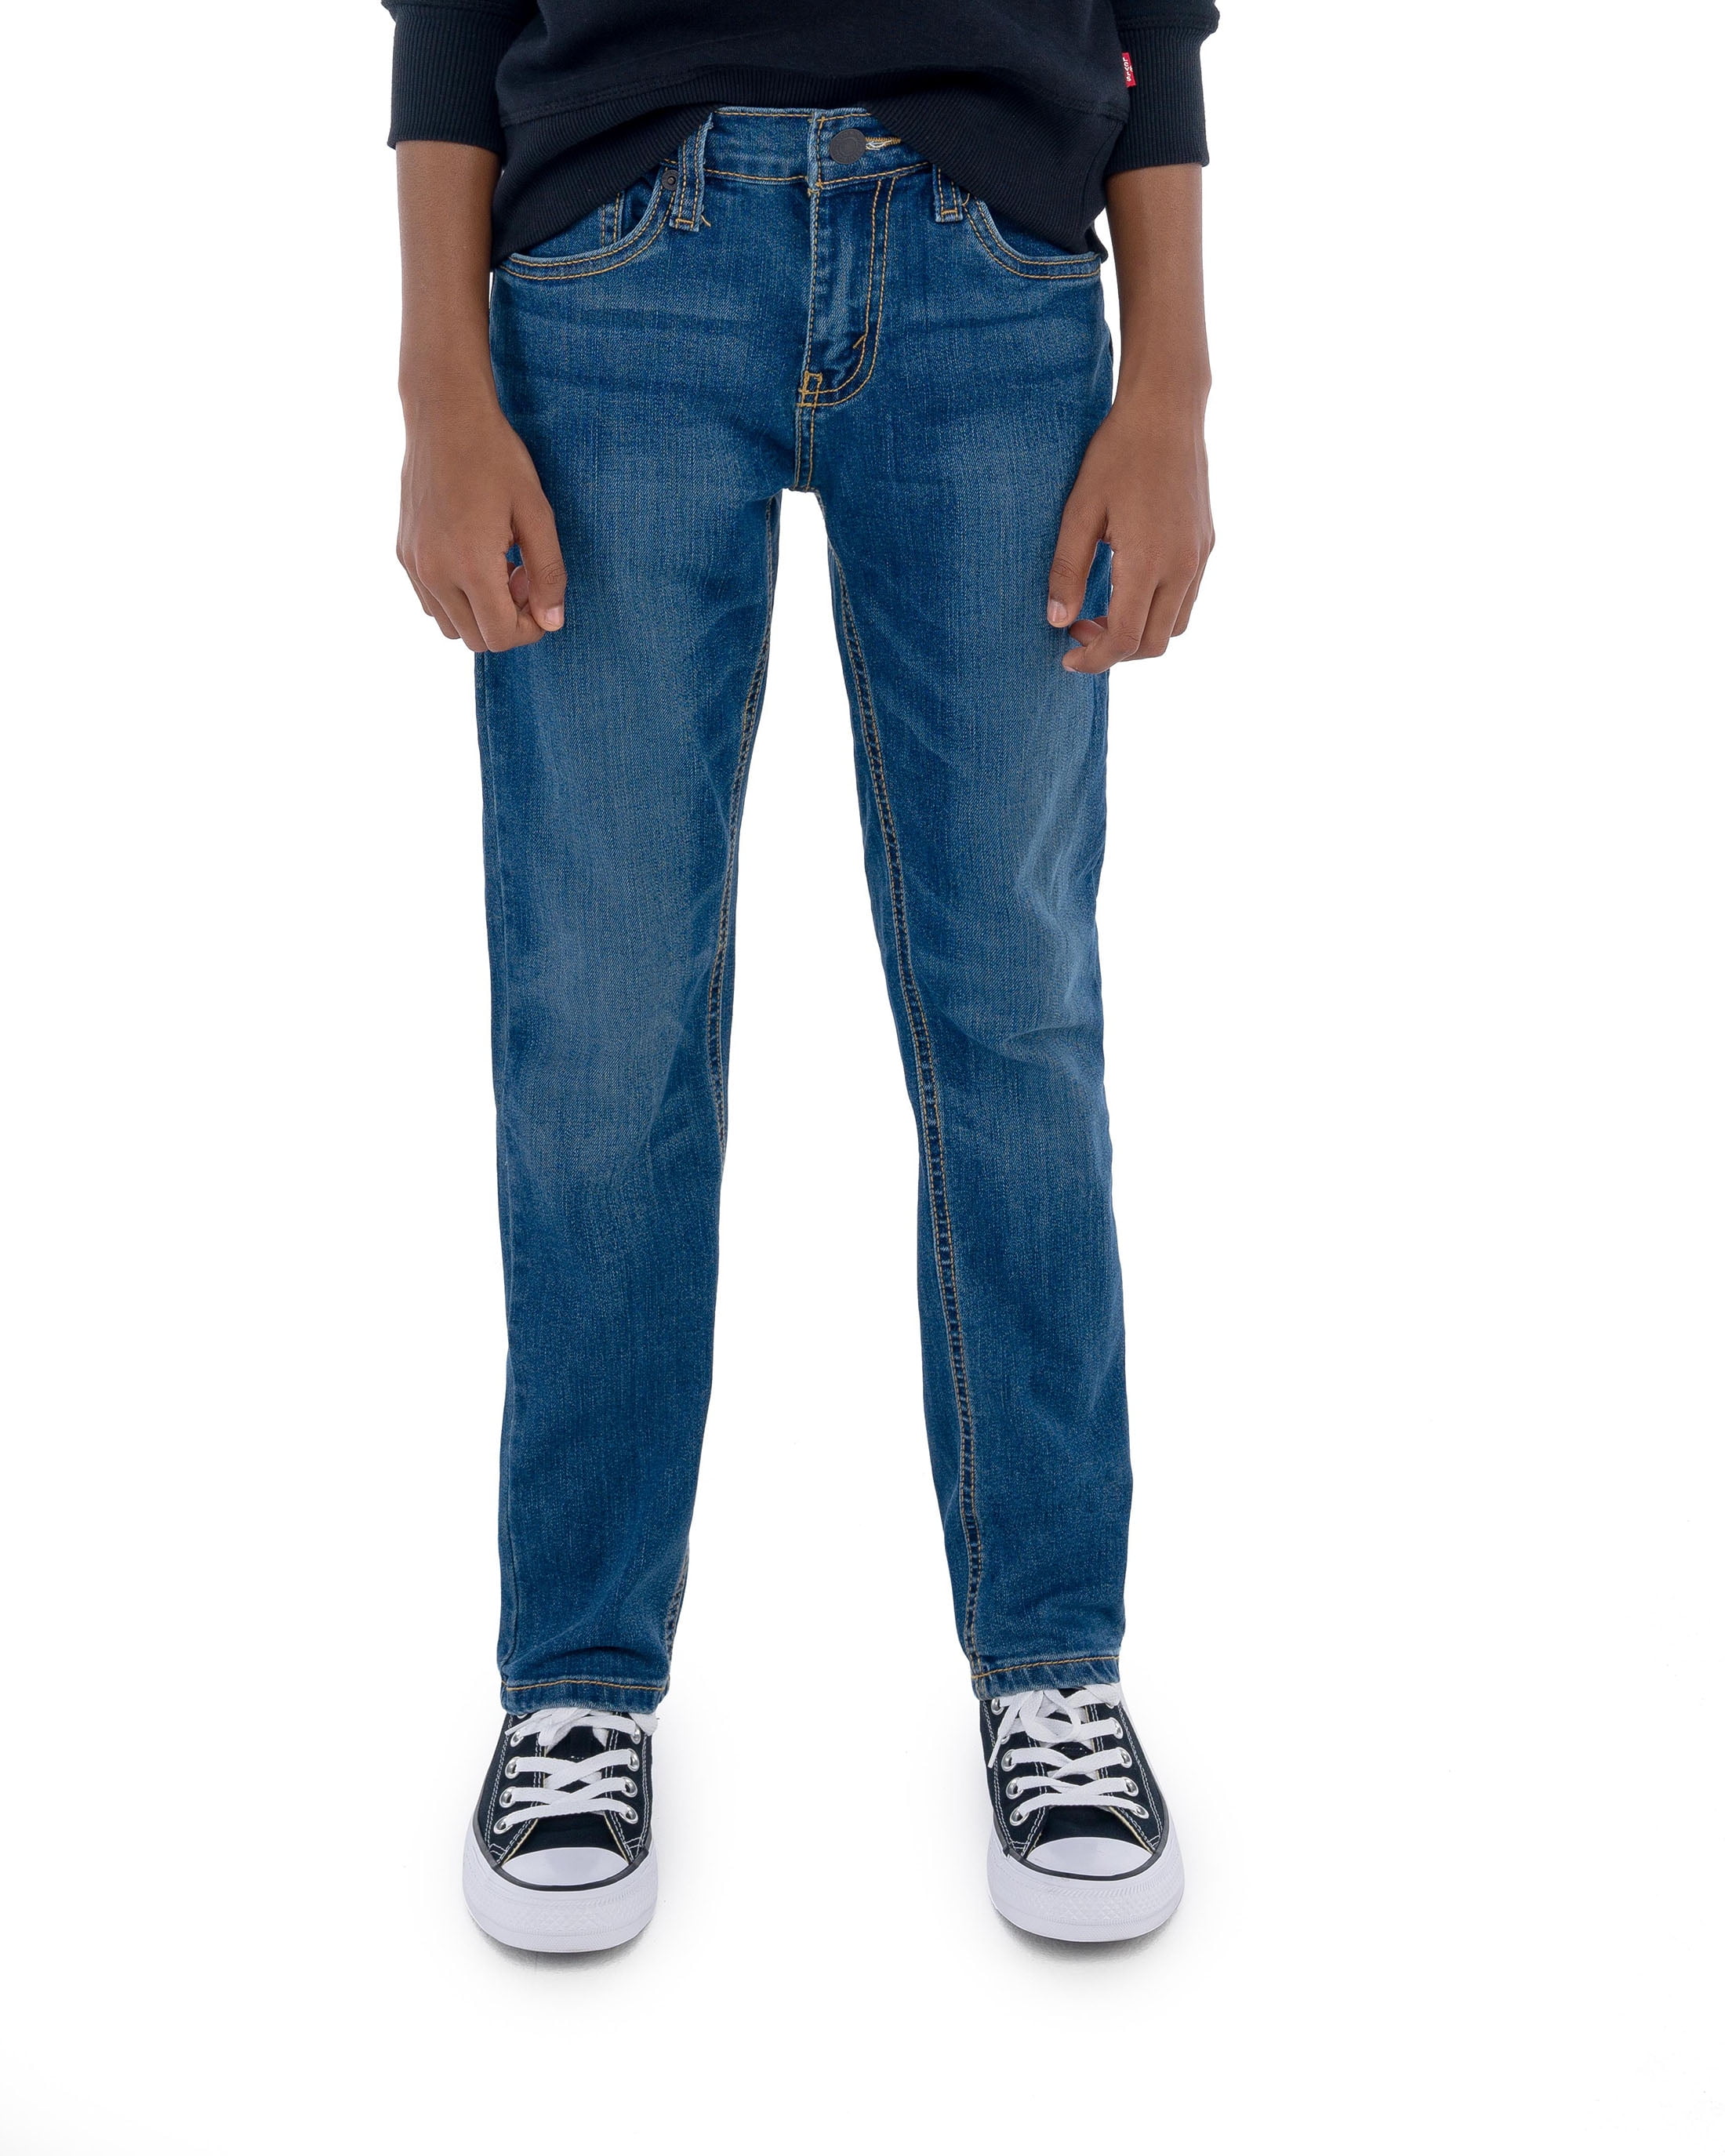 Levi's Boys' 511 Slim Fit Performance Jeans, Sizes 4-20 